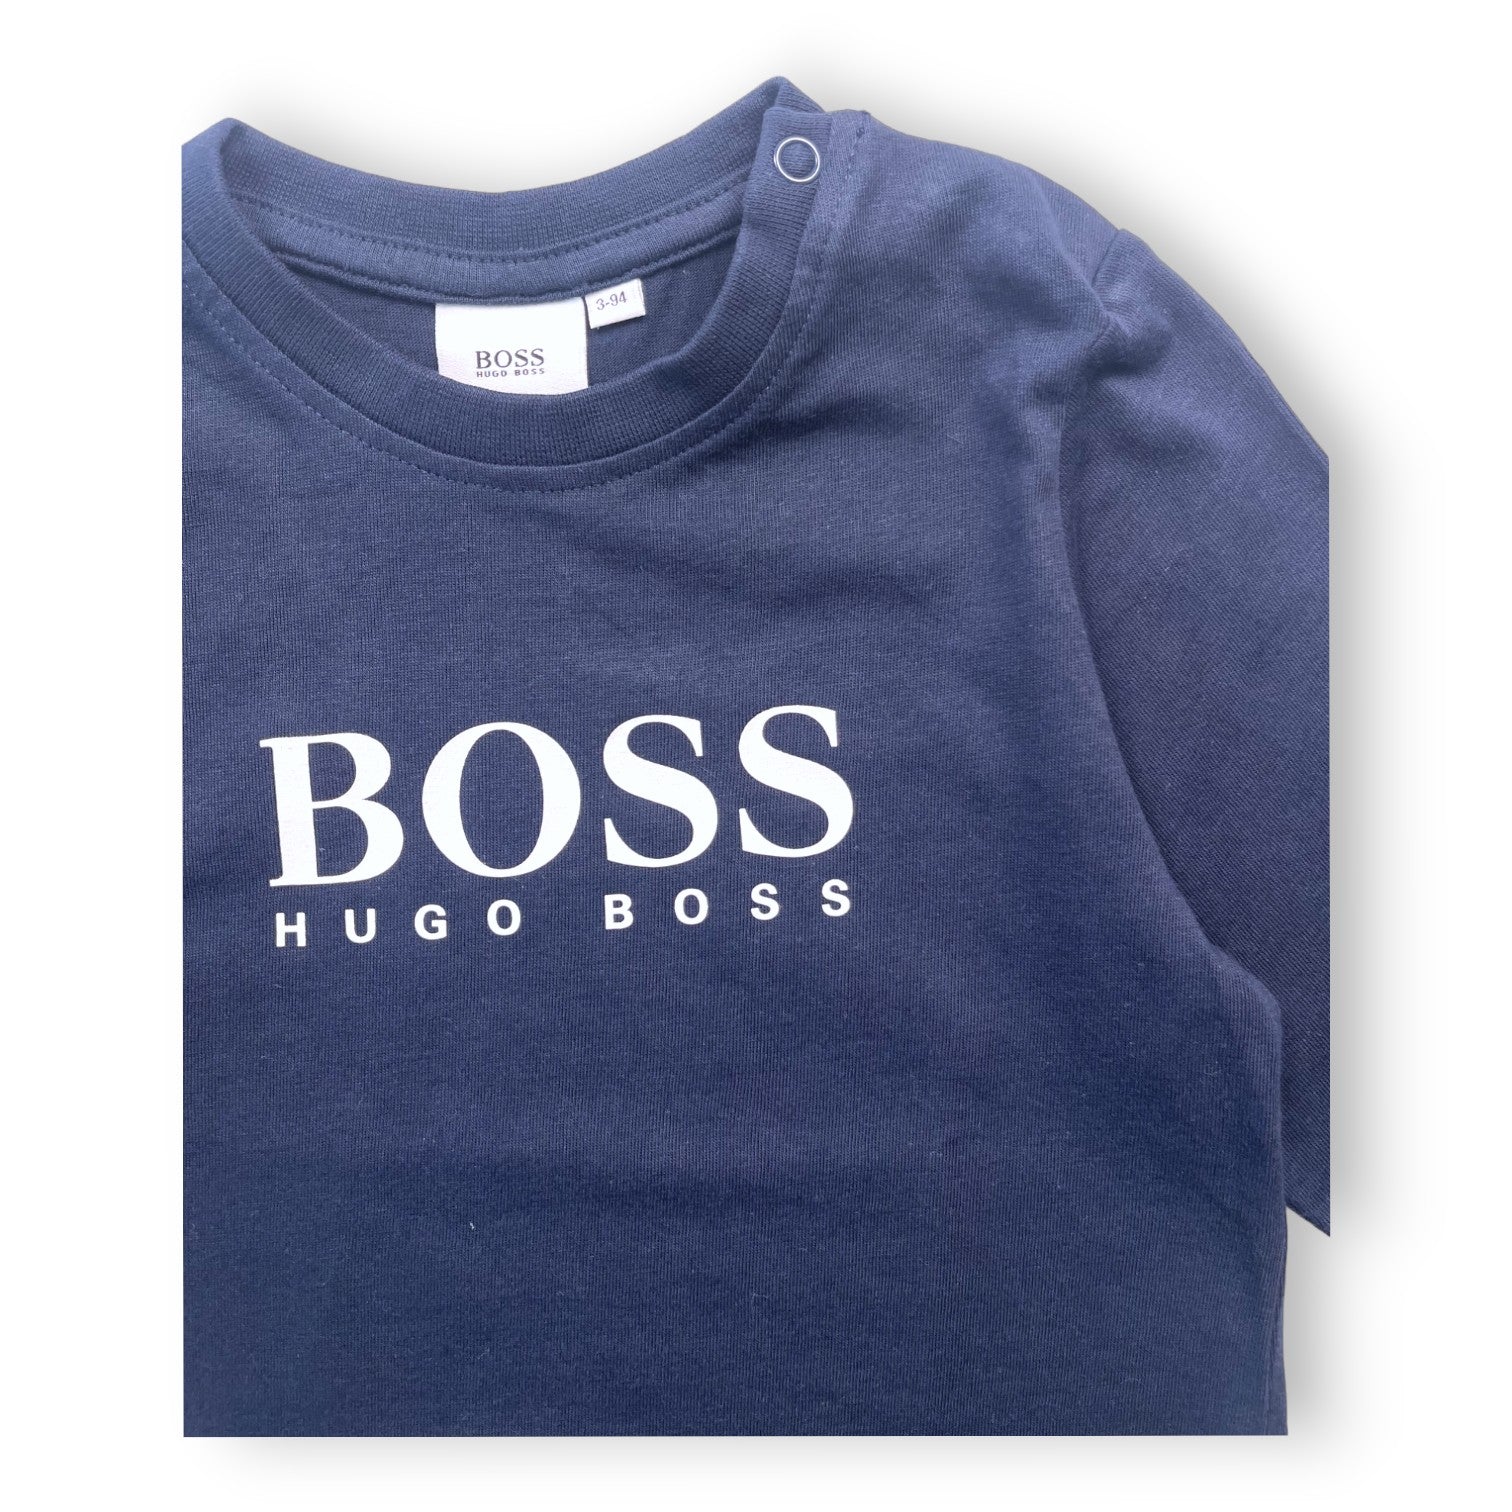 HUGO BOSS - T shirt bleu marine à manches longues - 3 ans